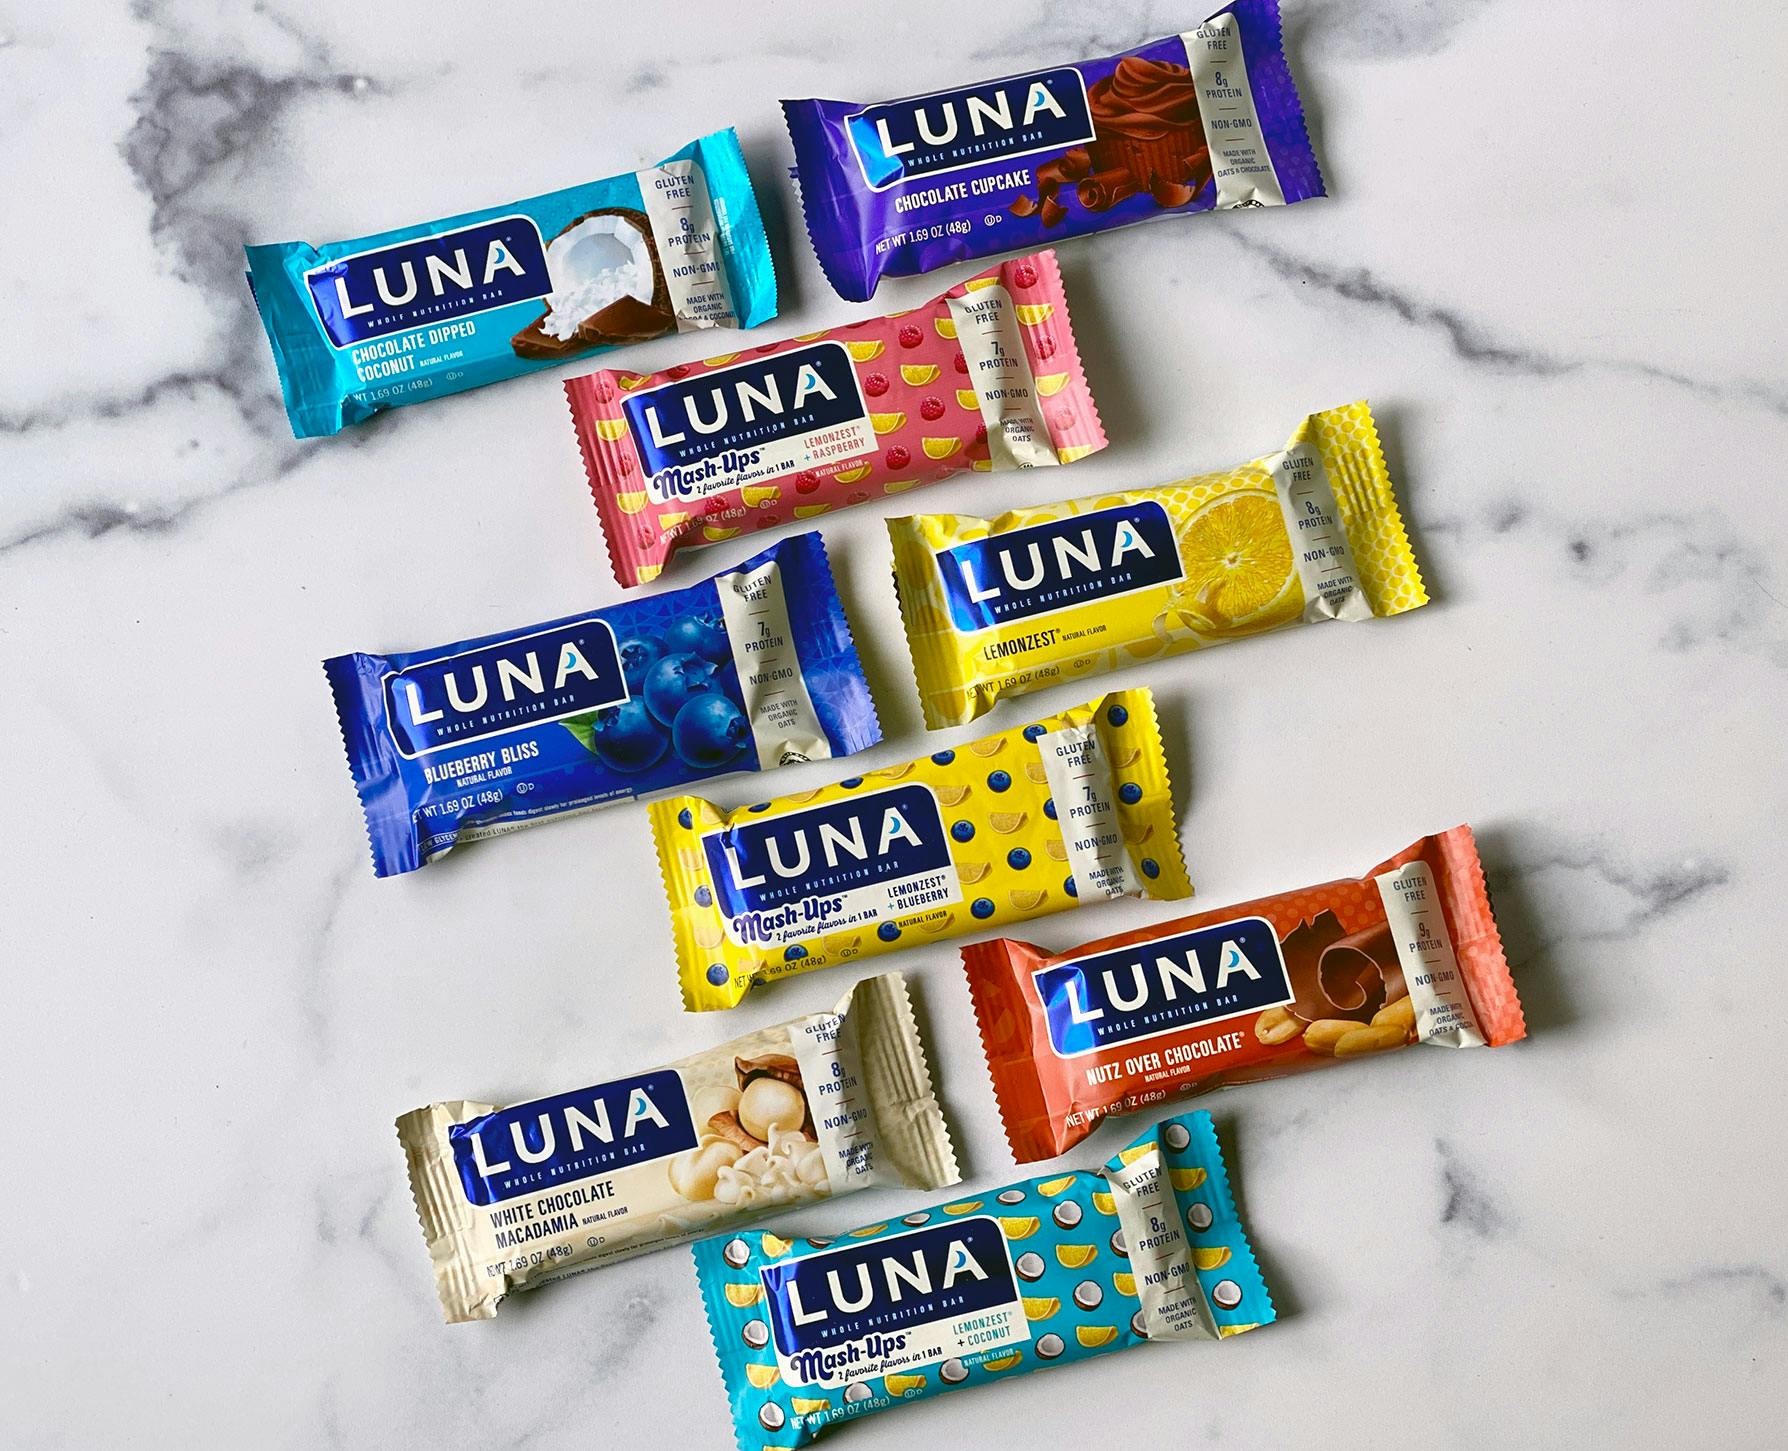 LUNA Bar in all flavors